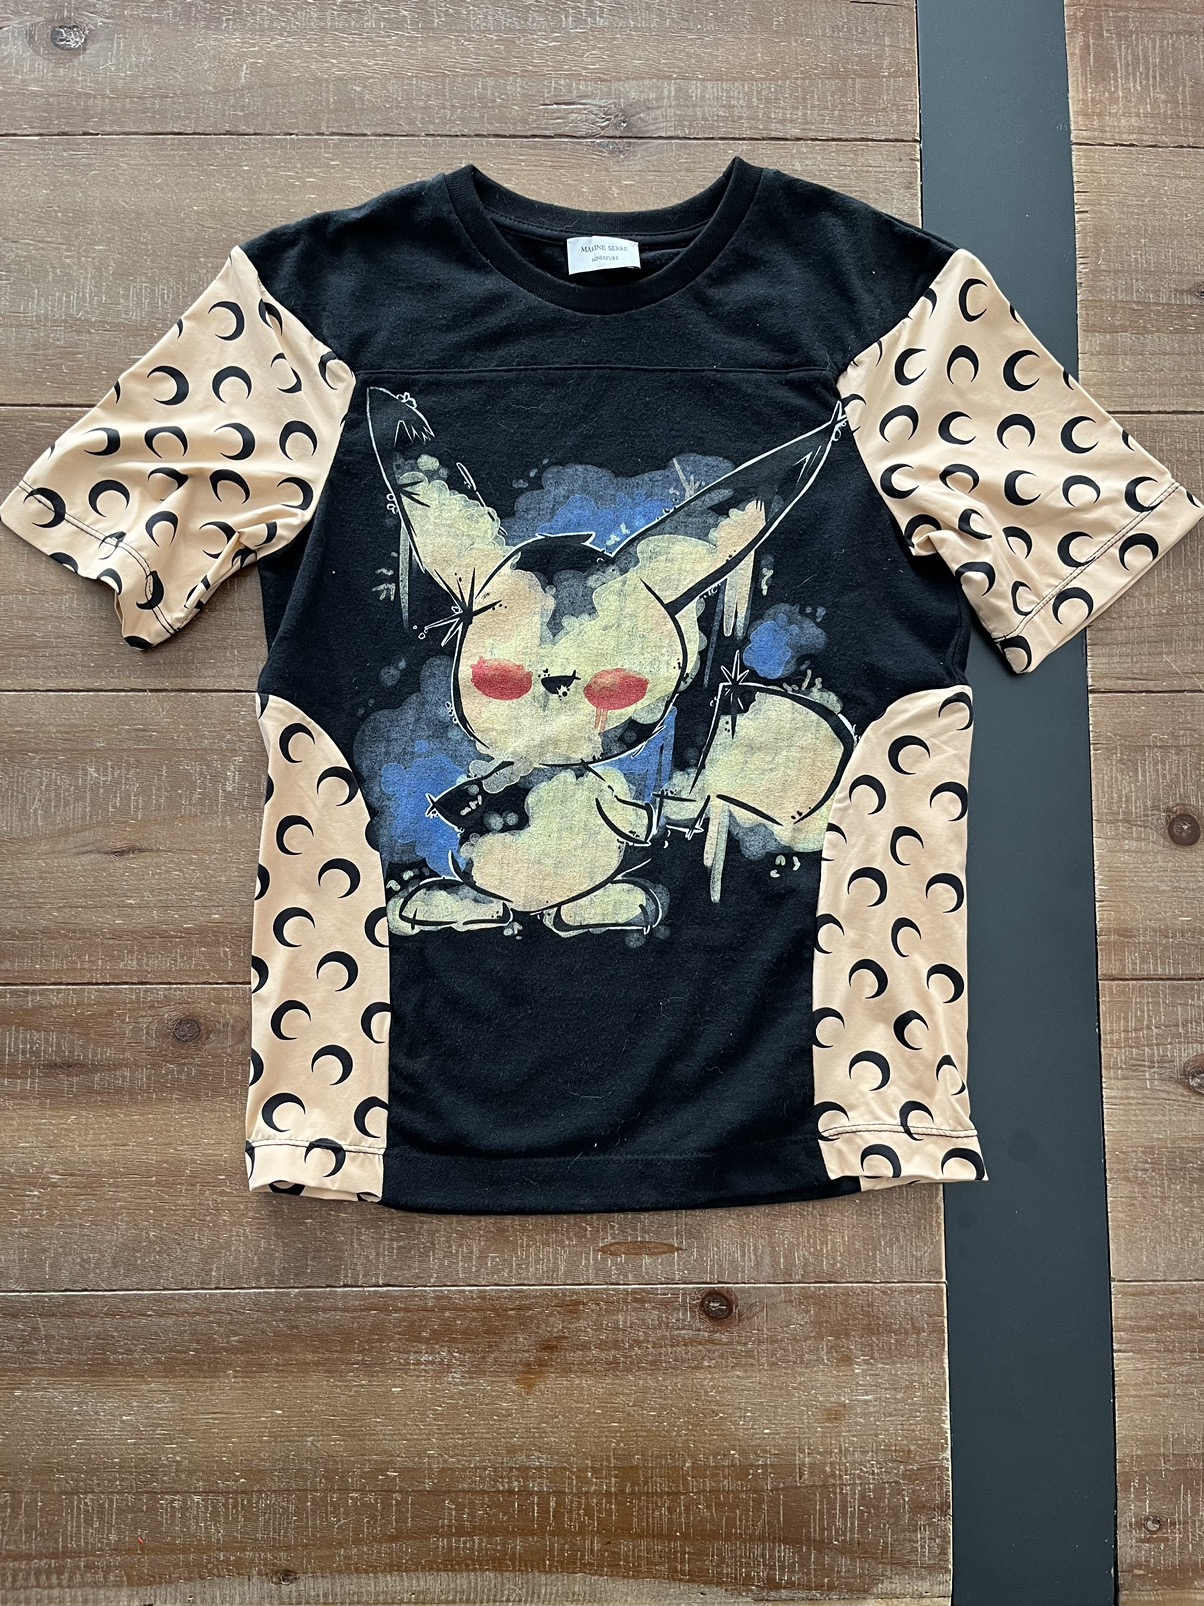 Marine Serre Pikachu Paneled t-shirt - 1